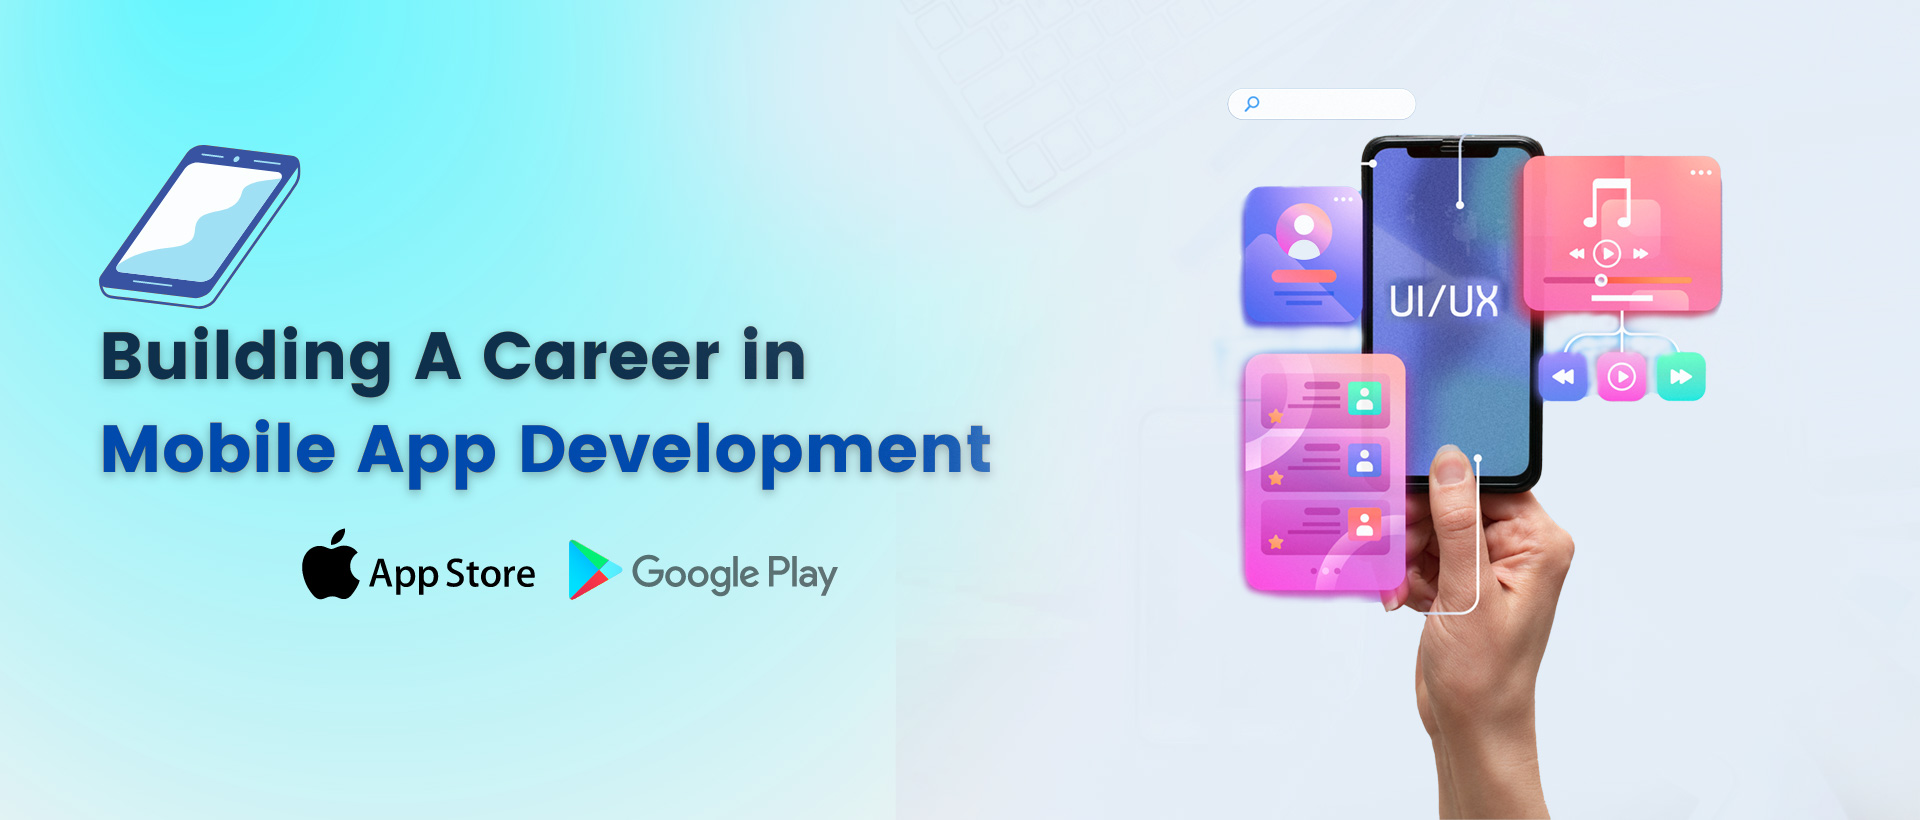 Building A Career in Mobile App Development